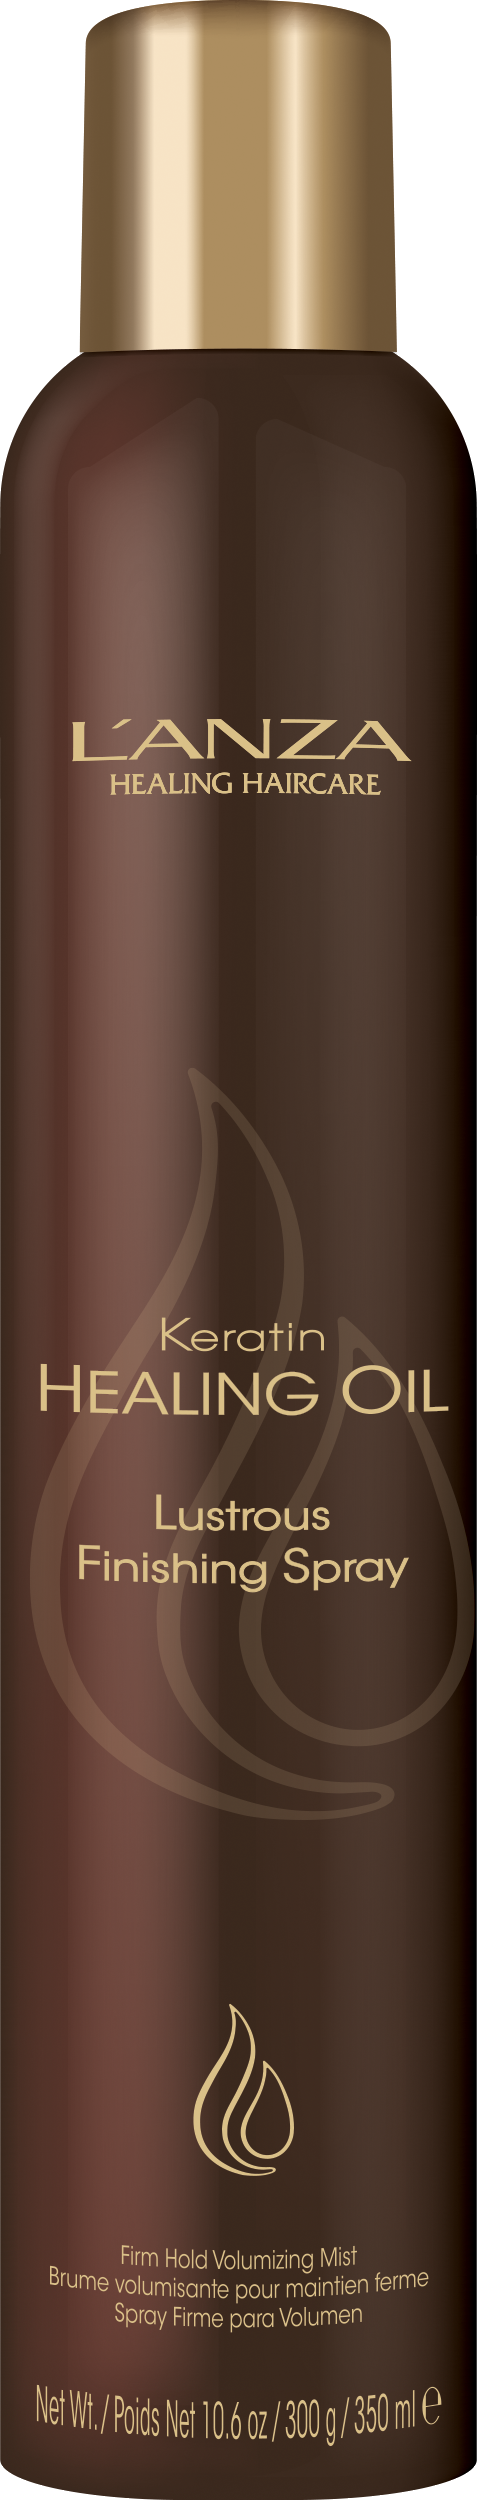 L'ANZA Keratin Healing Oil Finishing Spray